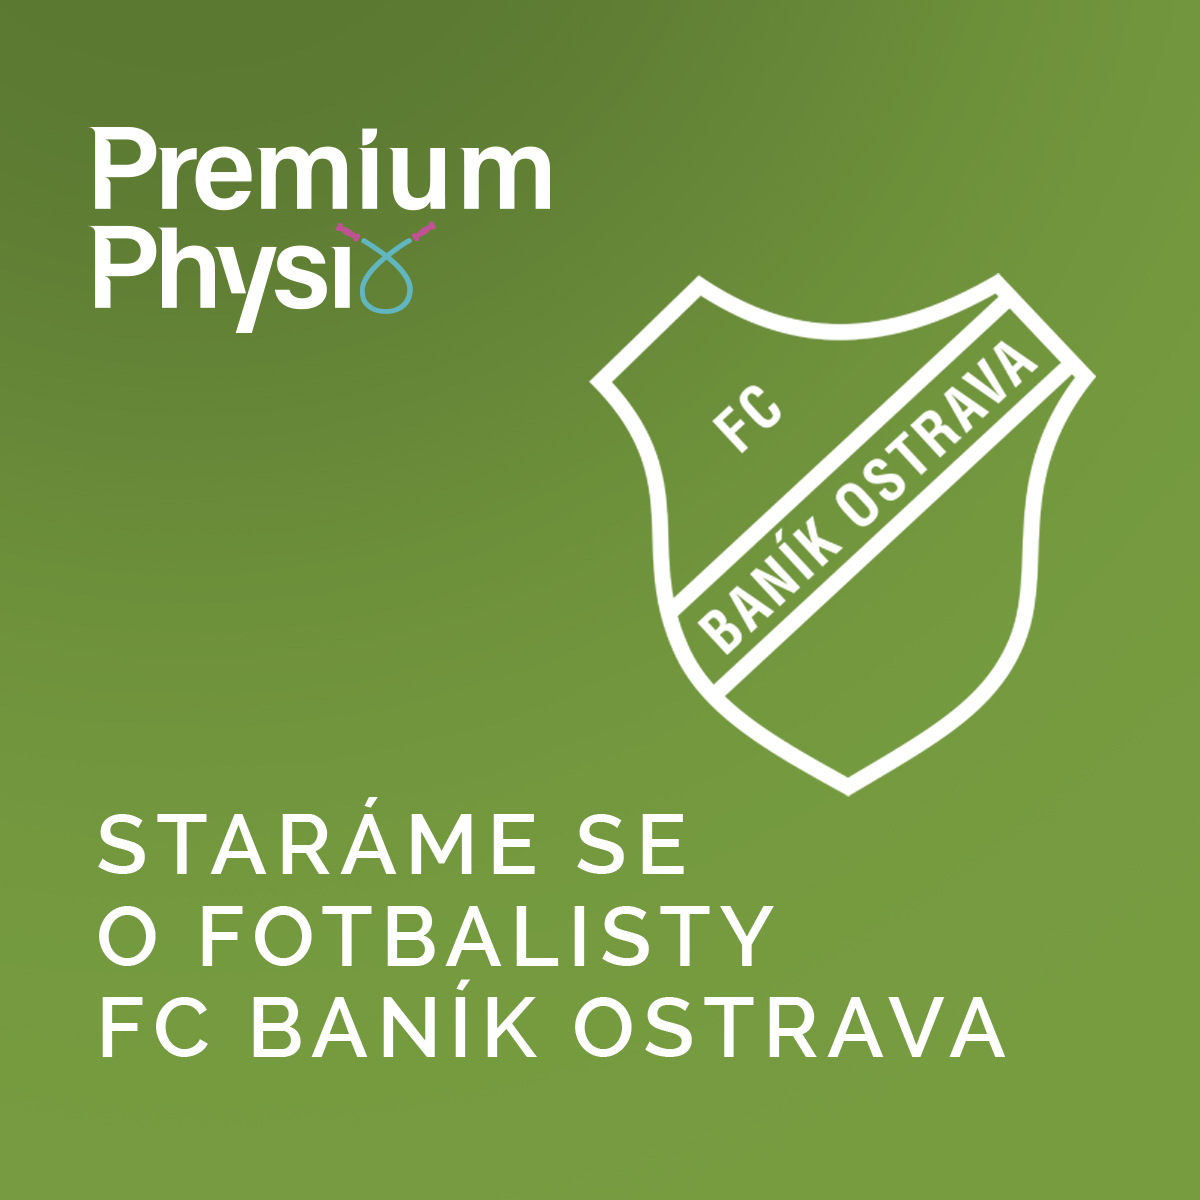 Premium Physio partnerem FC Baník Ostrava